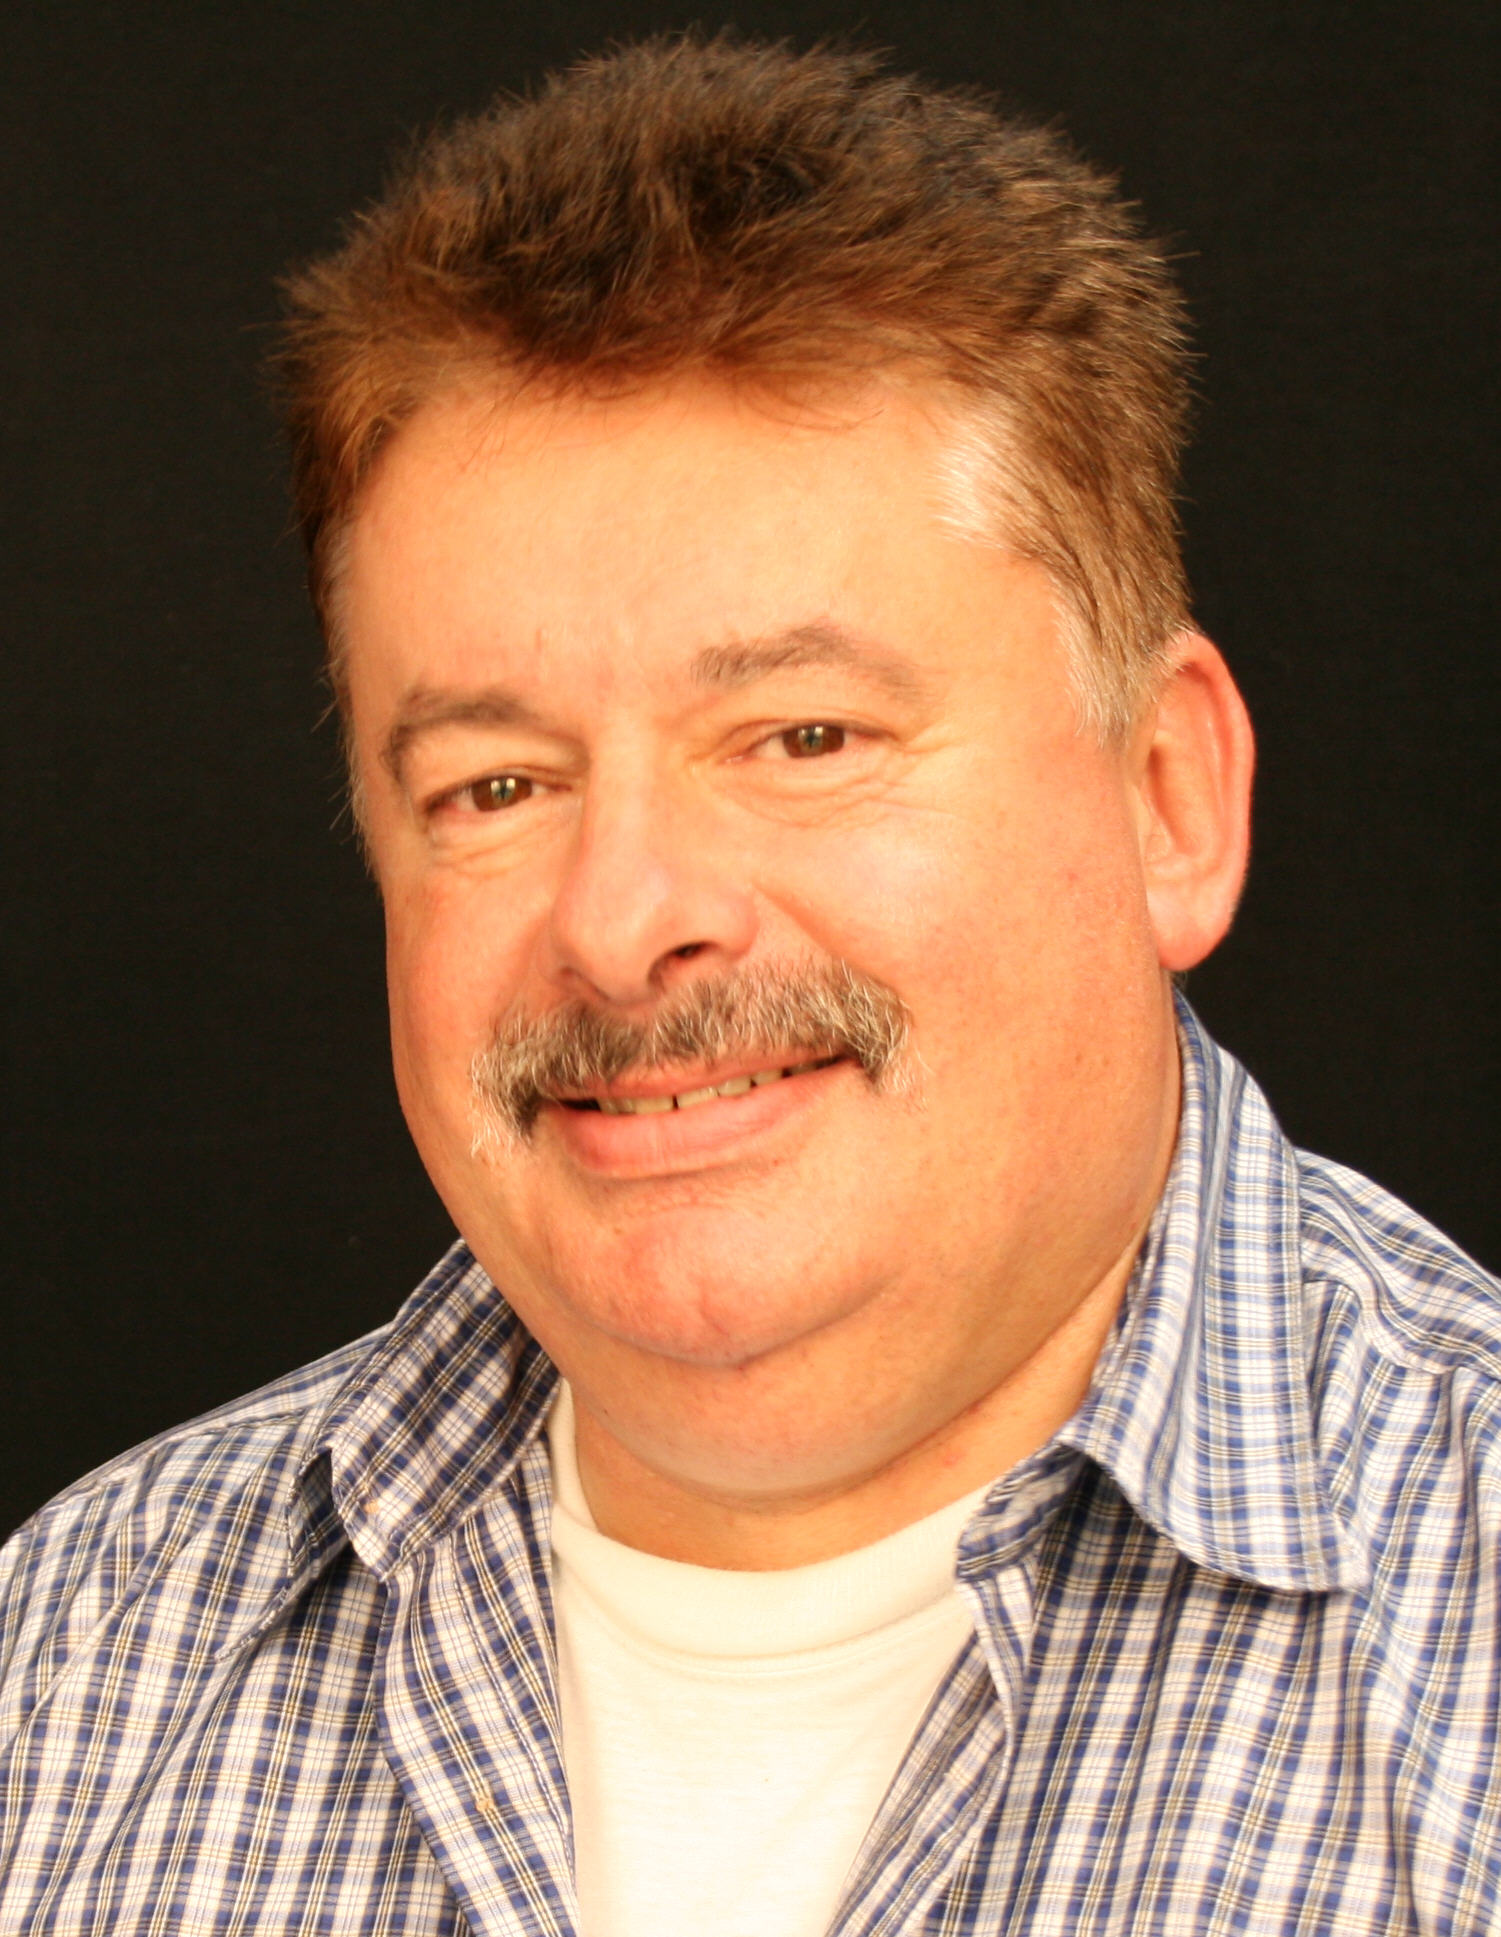 Wolfgang Mulinski, 54